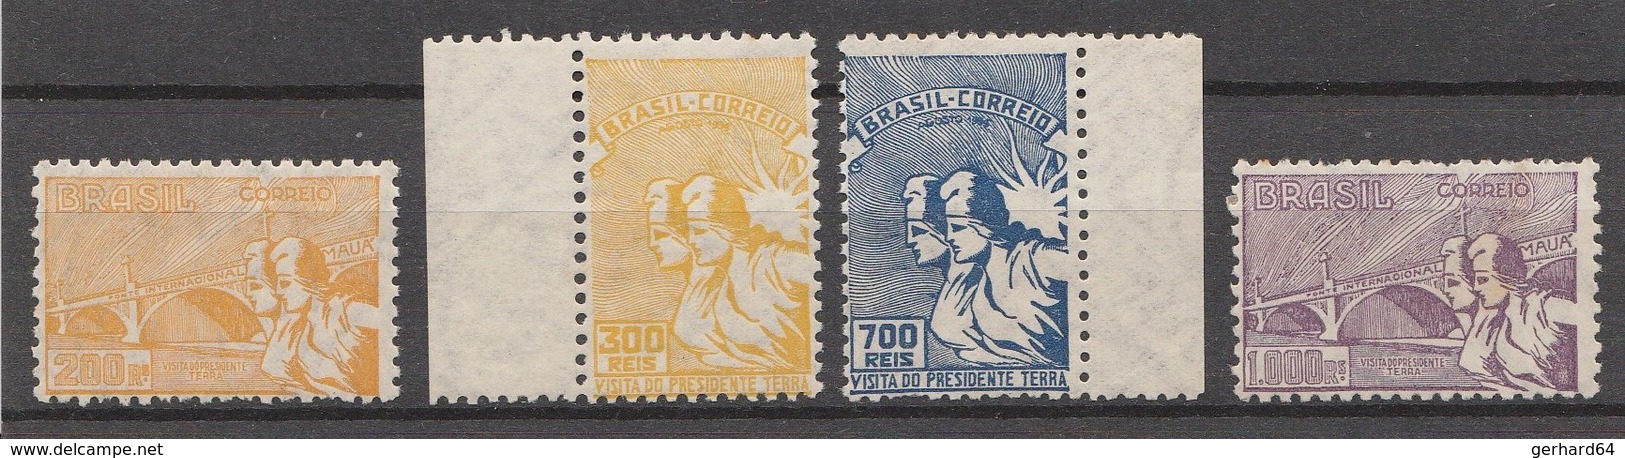 BRESIL 1935 - Yvert N° 279 à 282 - Série Complète ** Et * - 4 Valeurs (Visita Do Presidente Terra) - Unused Stamps